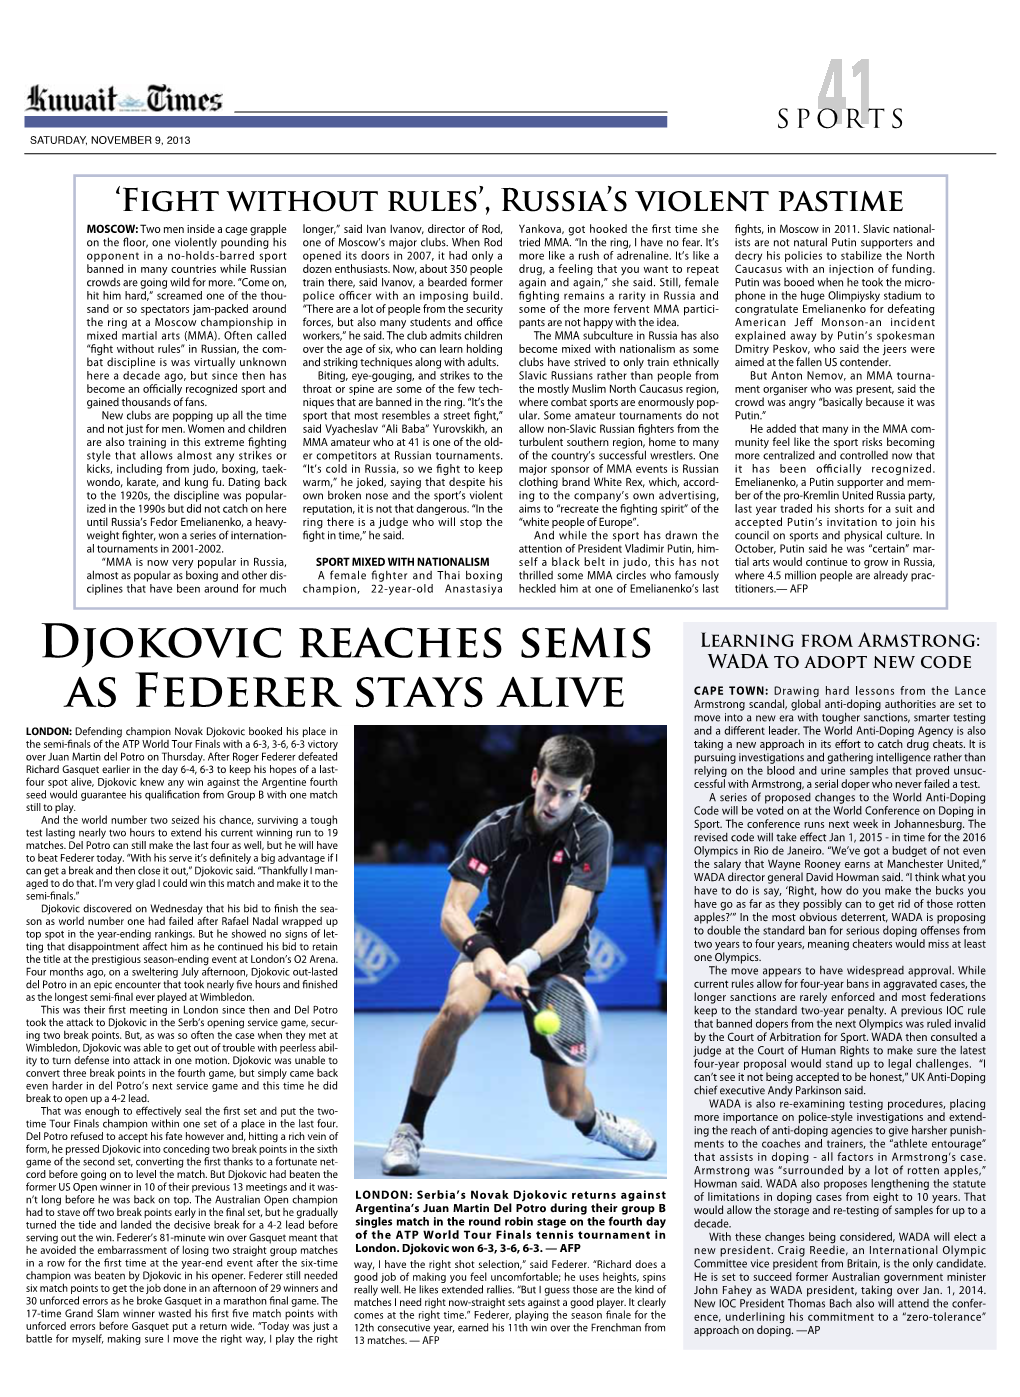 Djokovic Reaches Semis As Federer Stays Alive